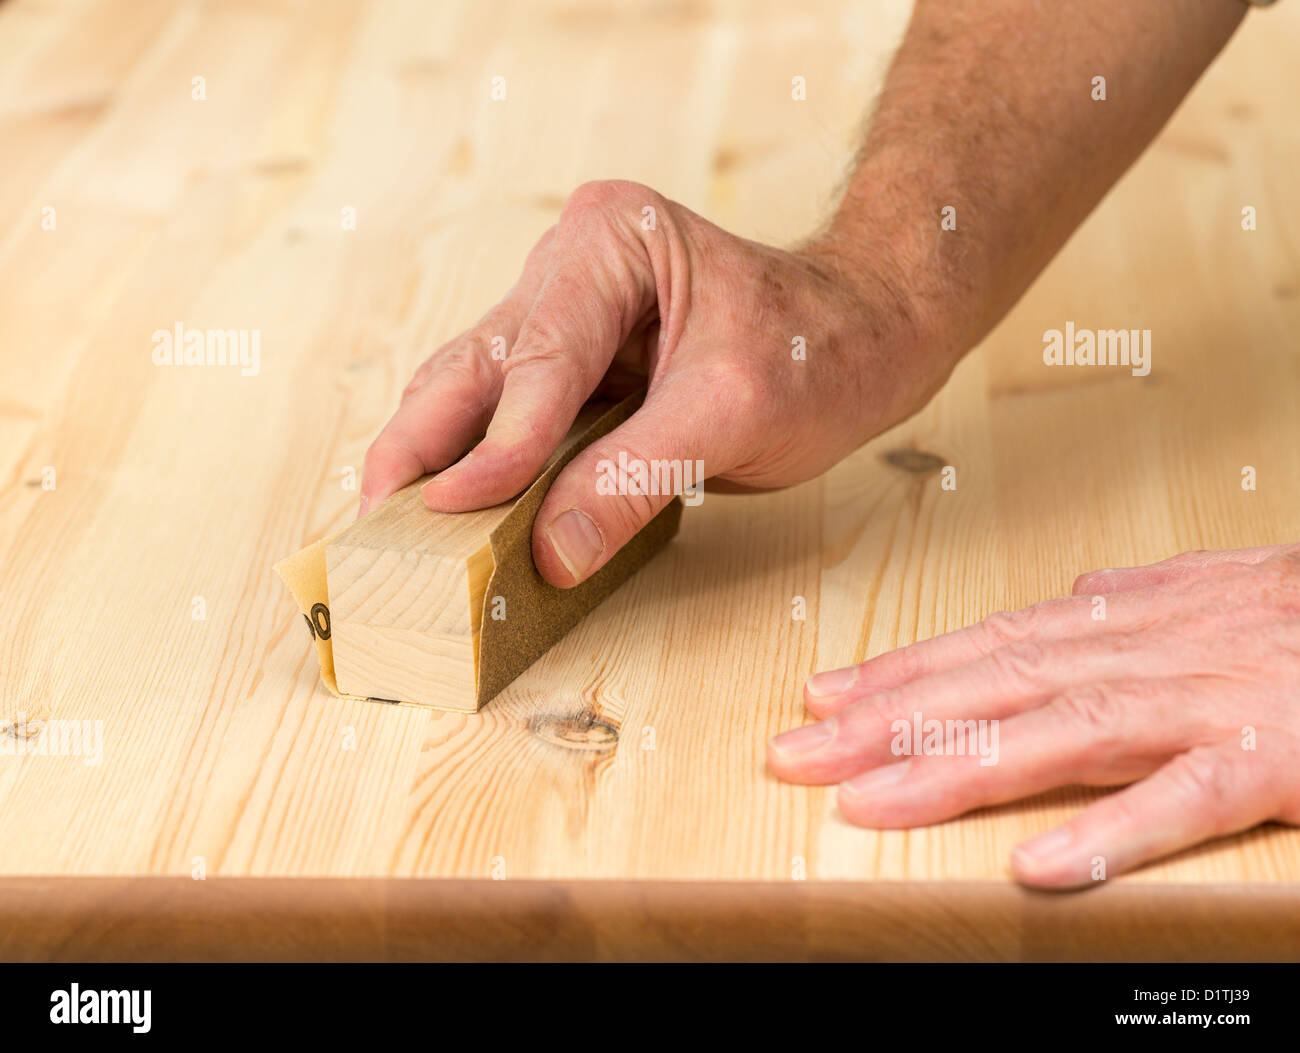 Man holding sanding block on pine floor or table sanding surface Stock Photo